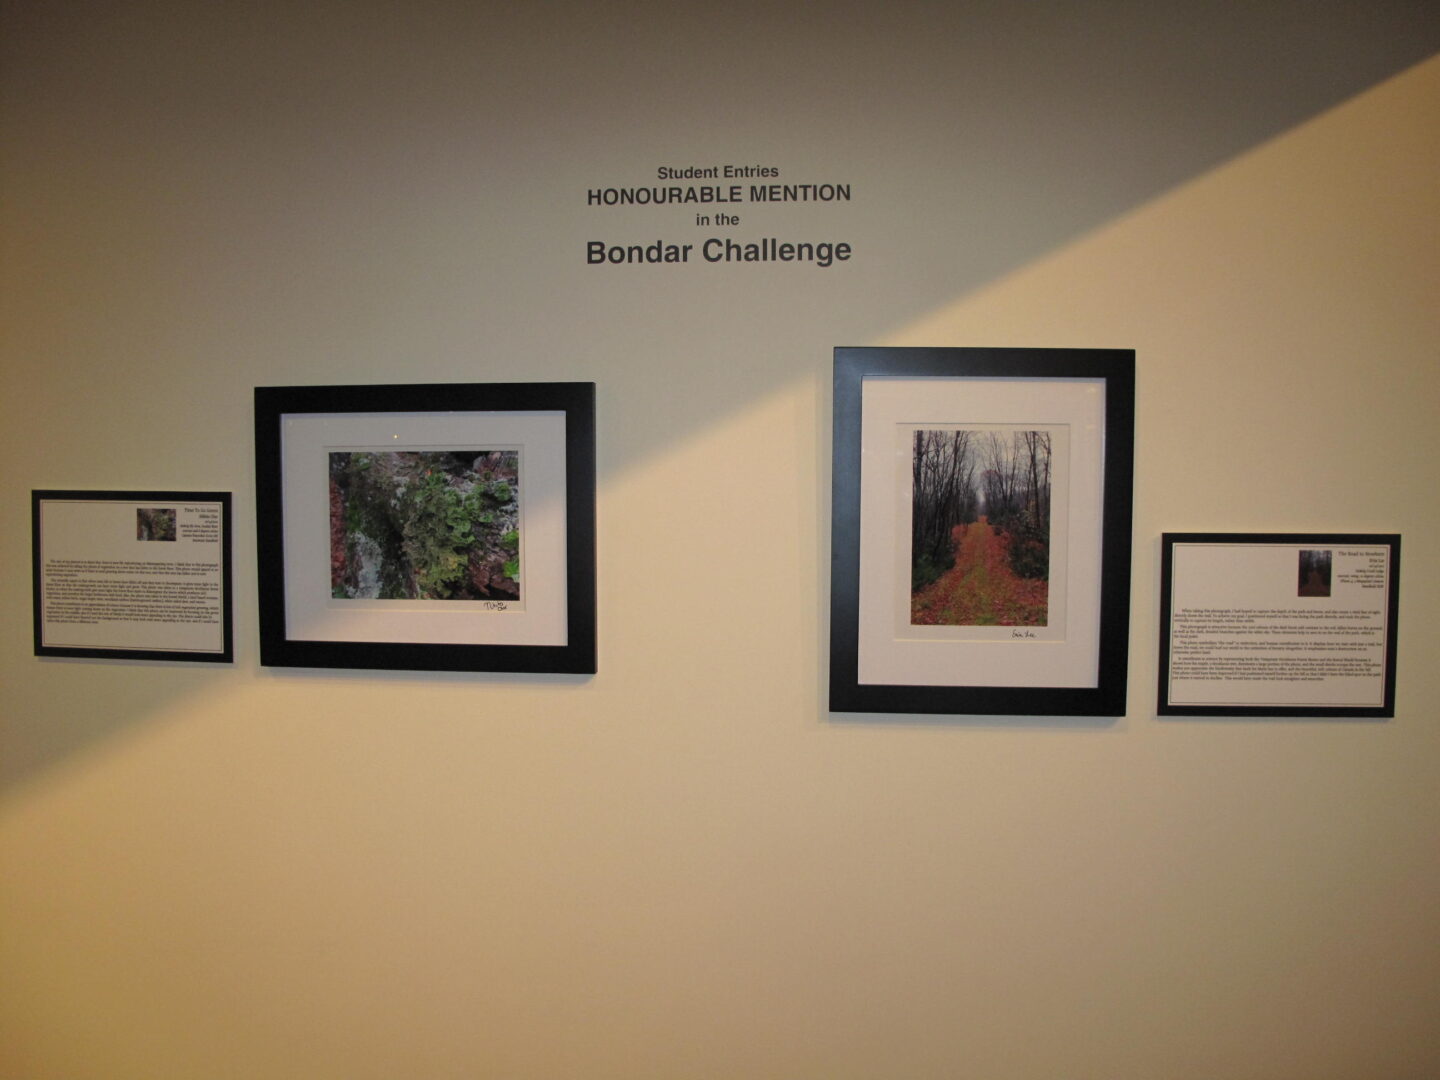 Image of Bondar Challenge winning photos in a gallery